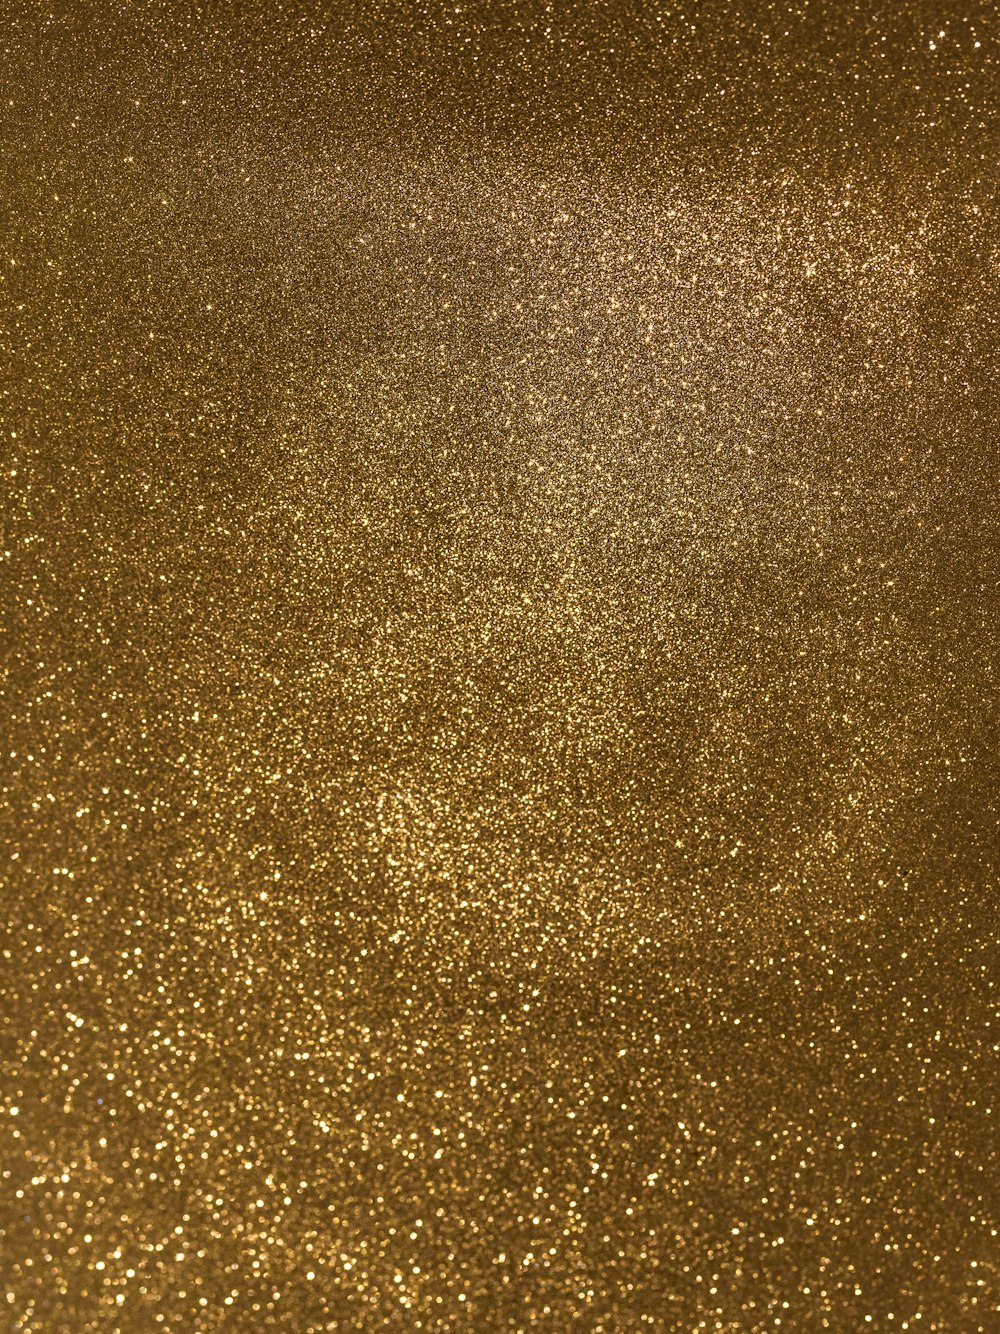 Golden Glitters Background Stock Photo 184325067